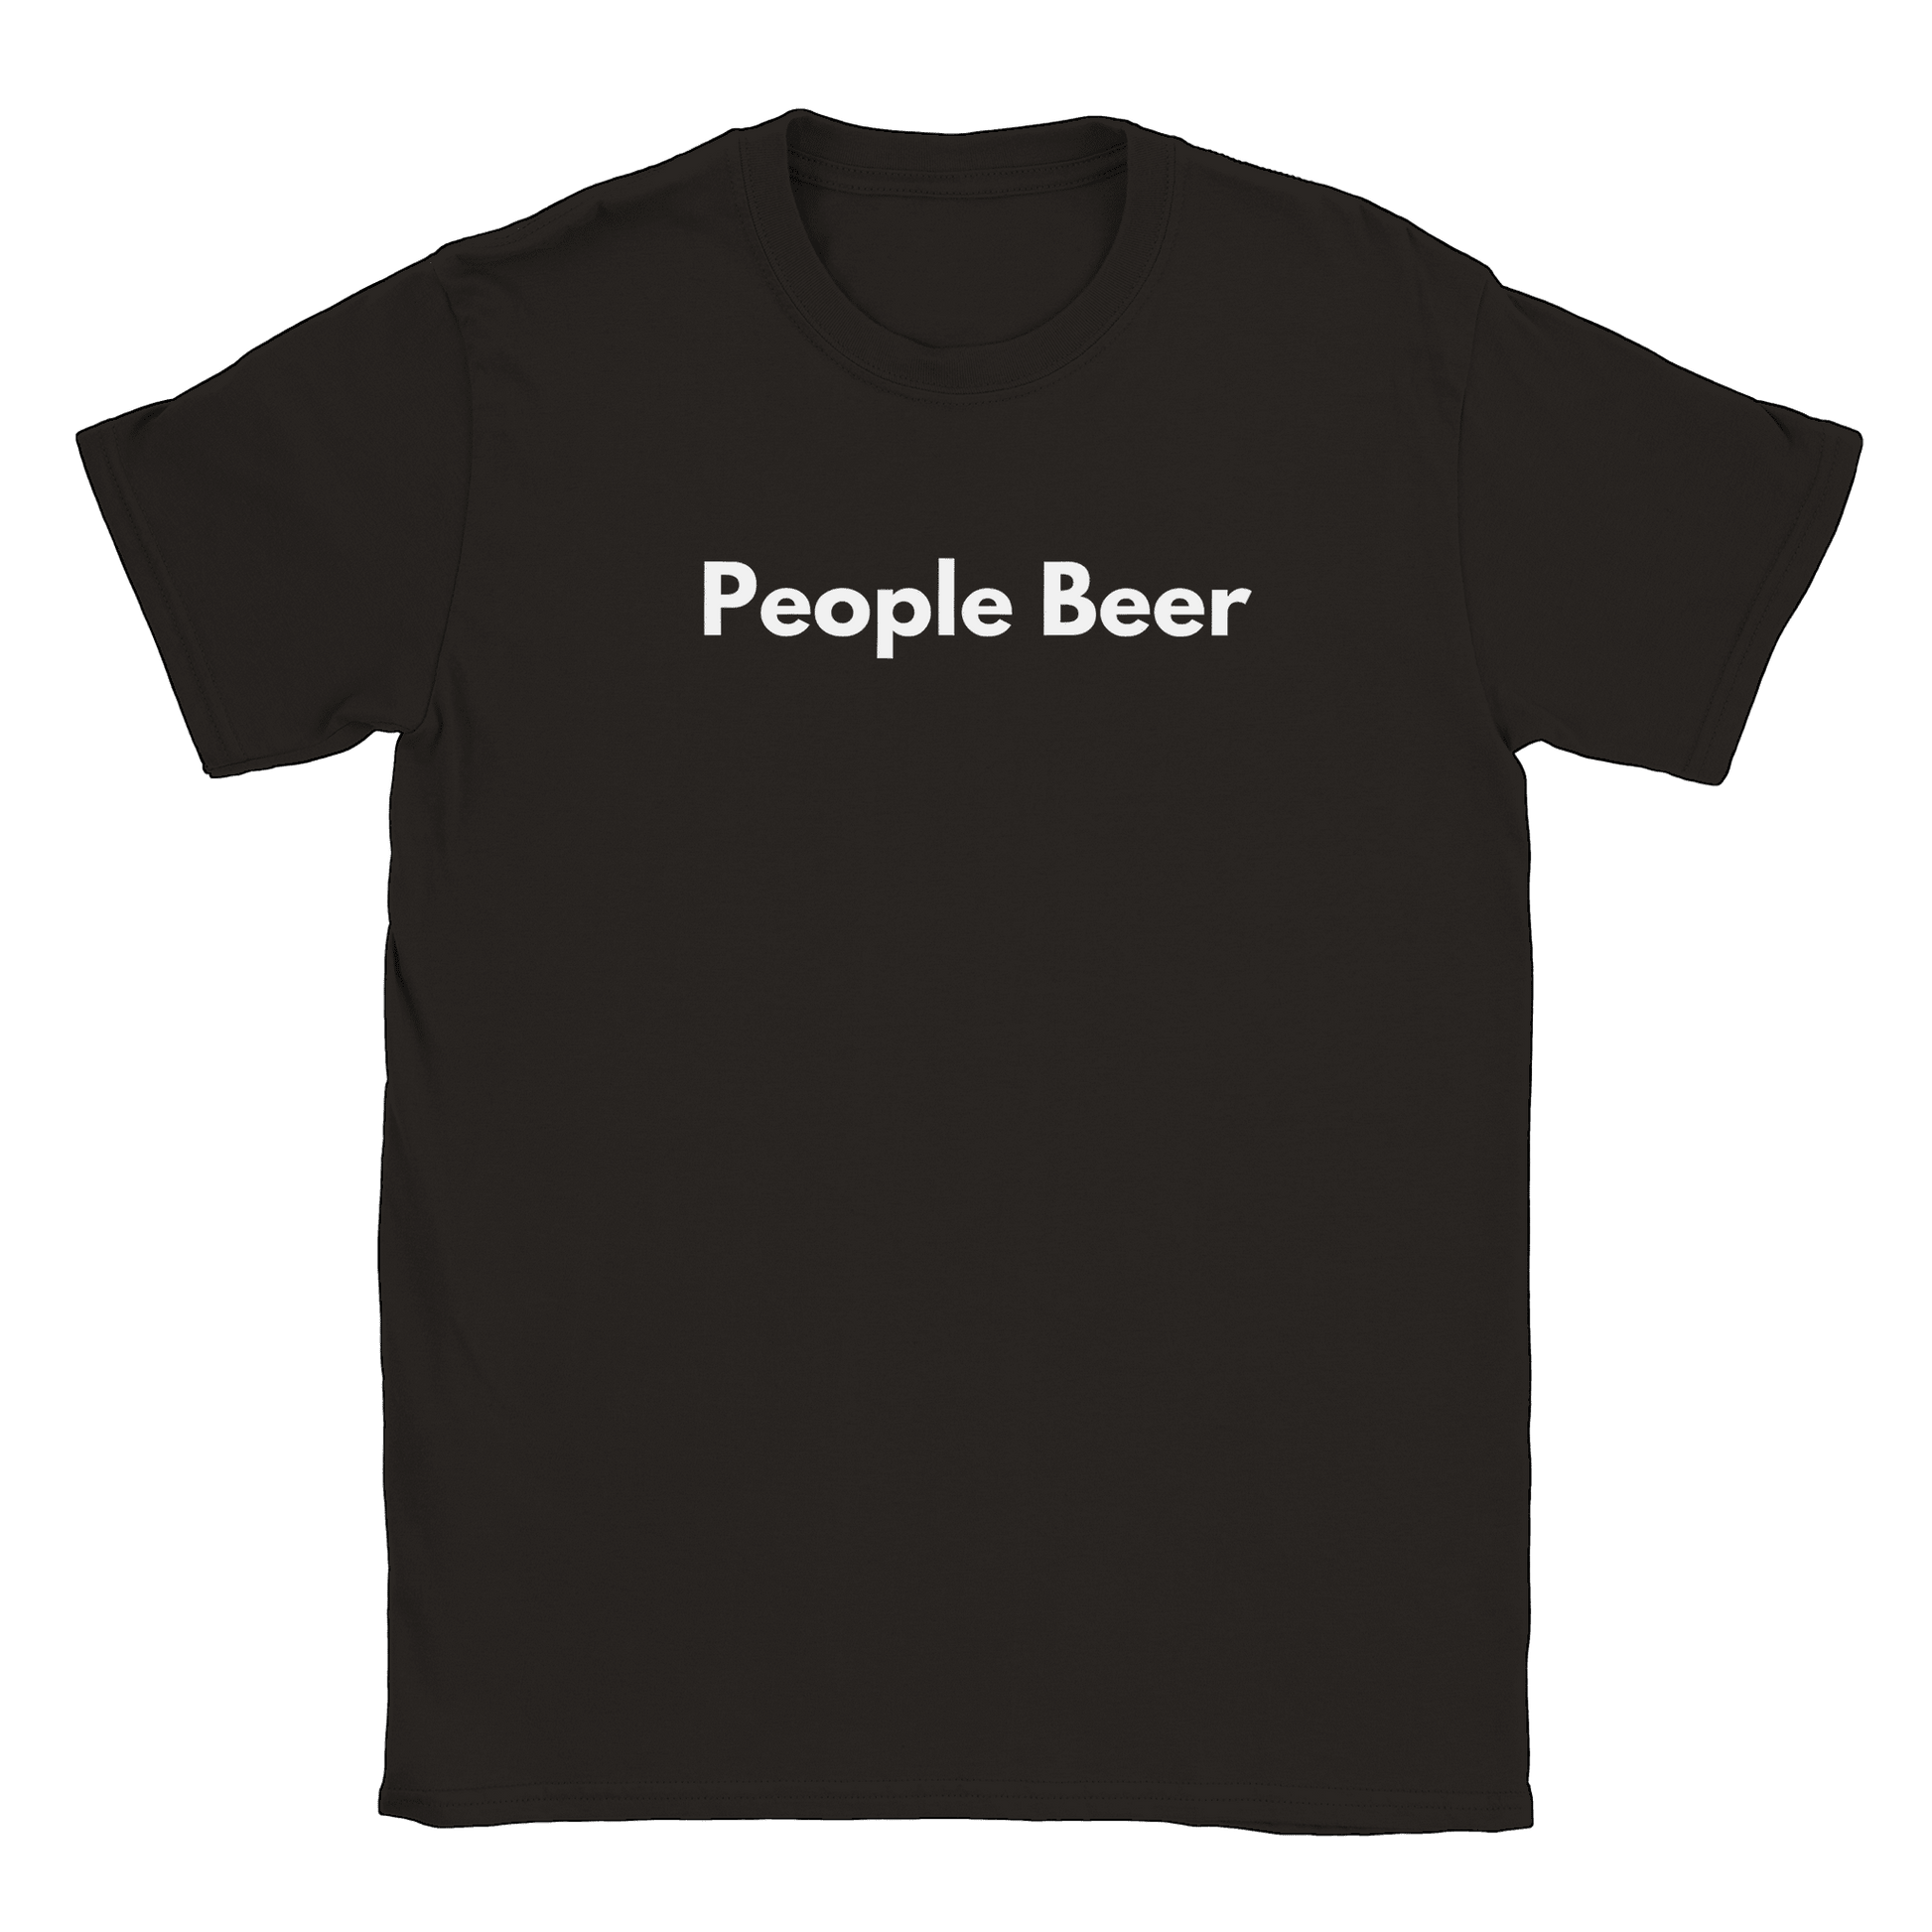 Folköl - T-shirt Svart